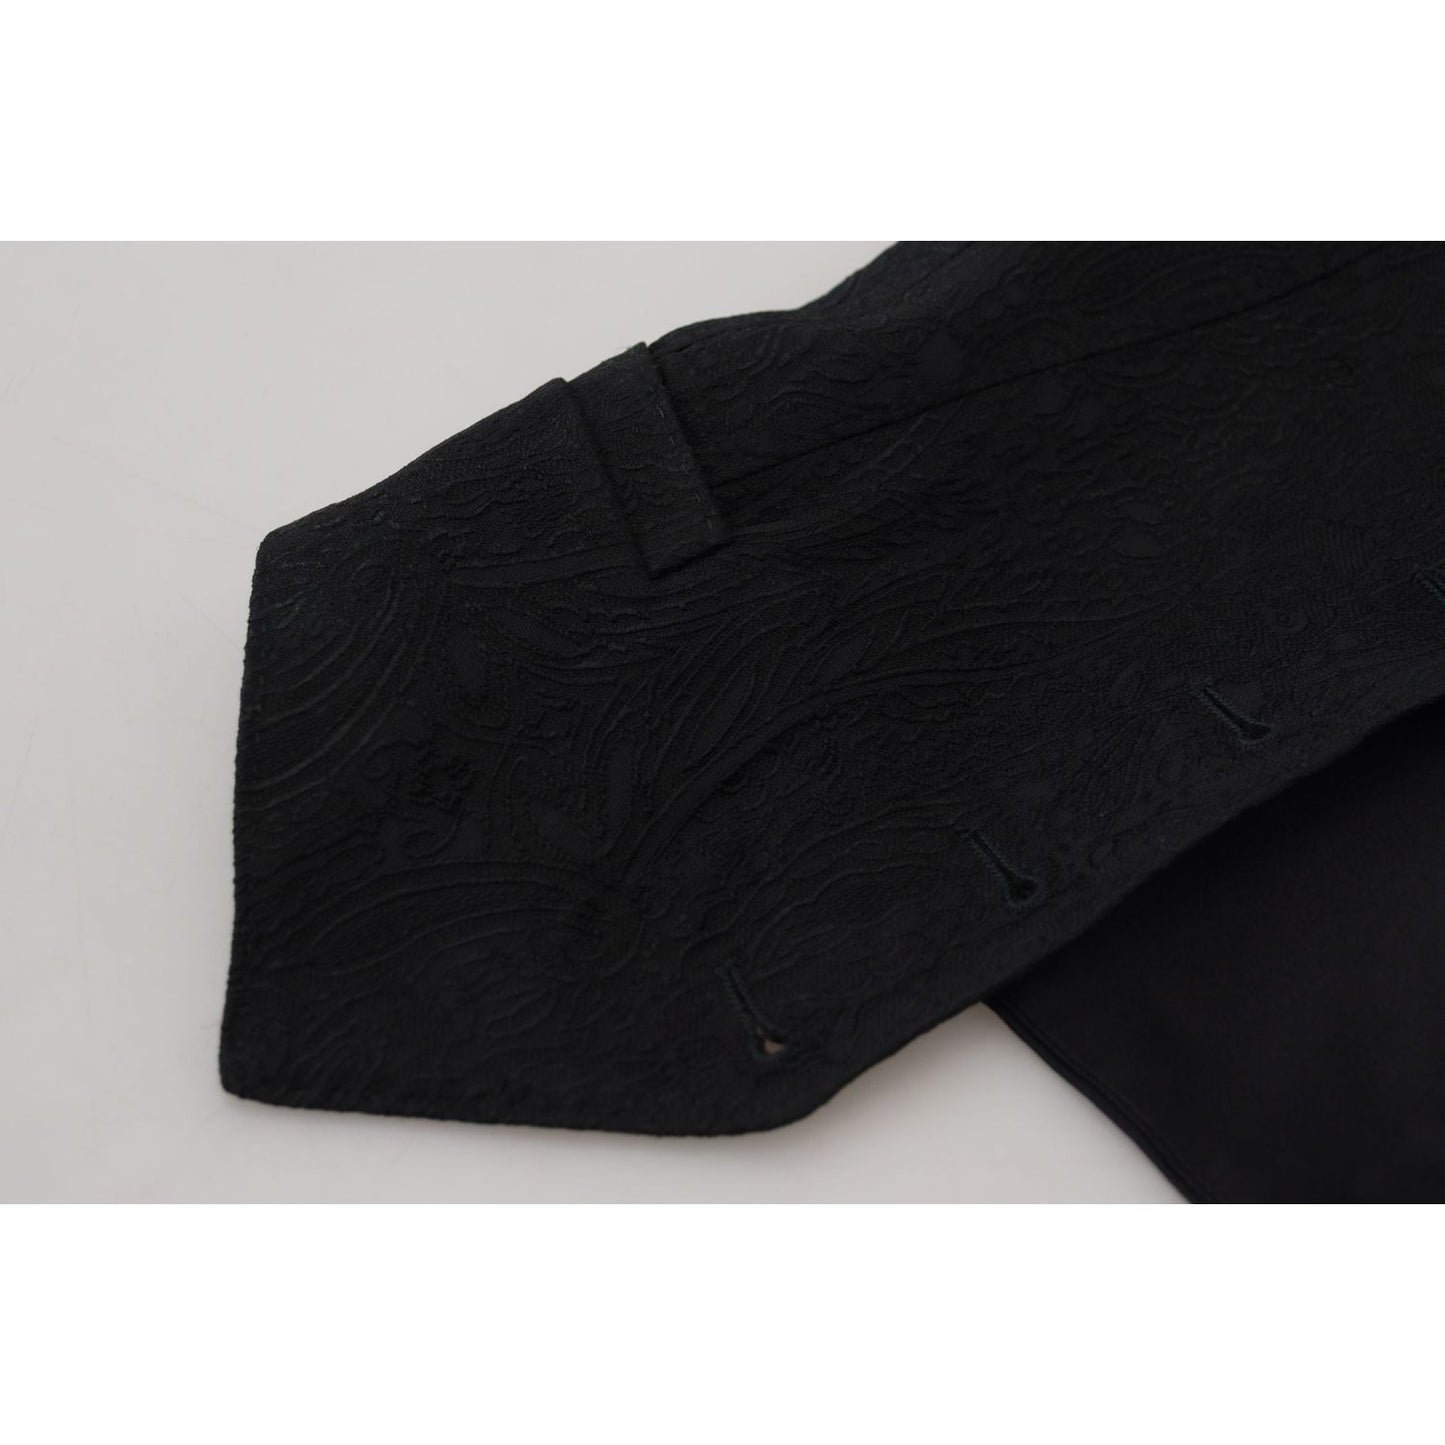 Dolce & GabbanaElegant Black Silk Blend Waistcoat VestMcRichard Designer Brands£399.00